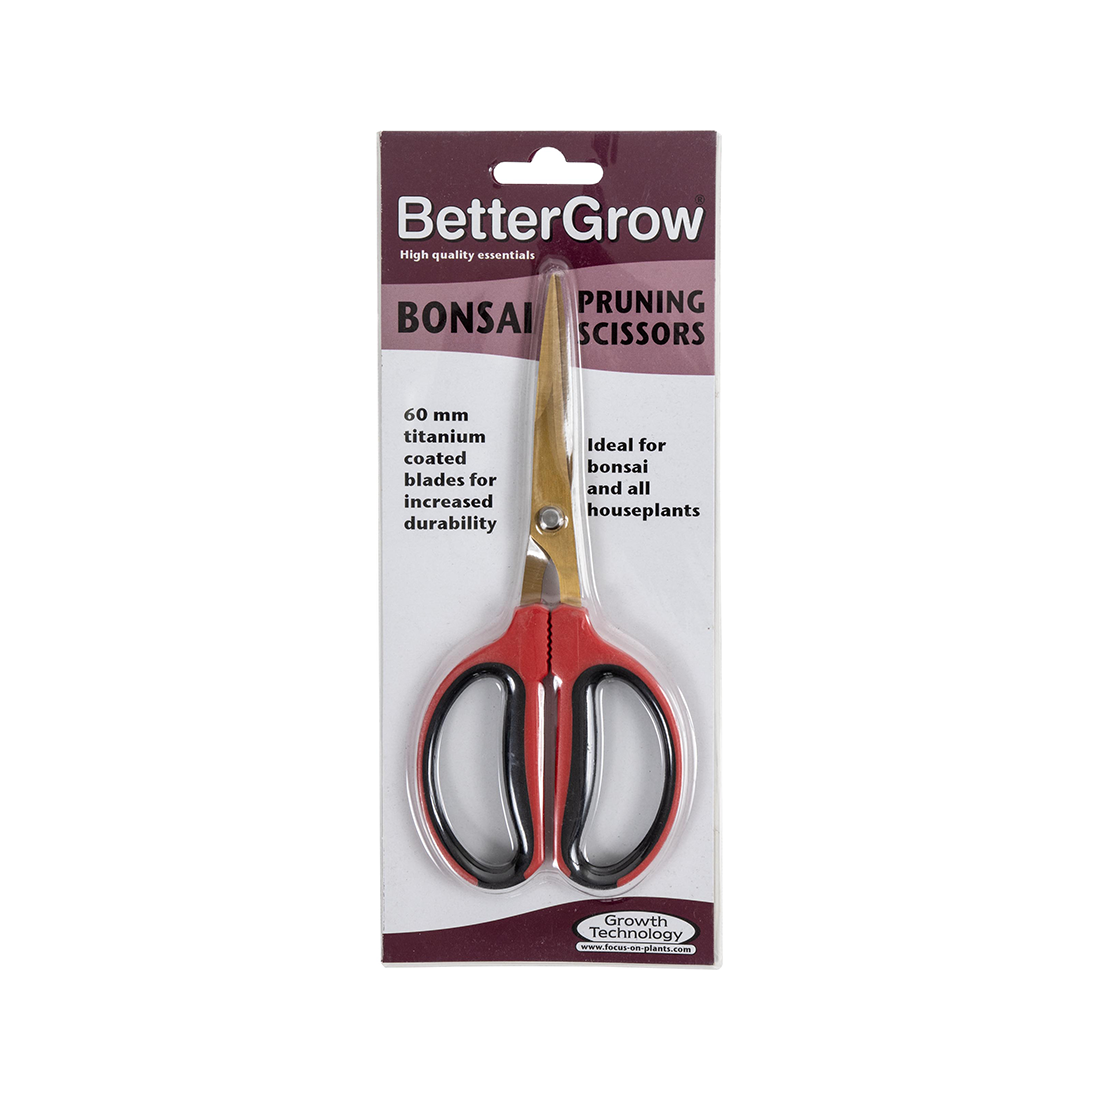 BetterGrow Bonsai Pruning Scissors